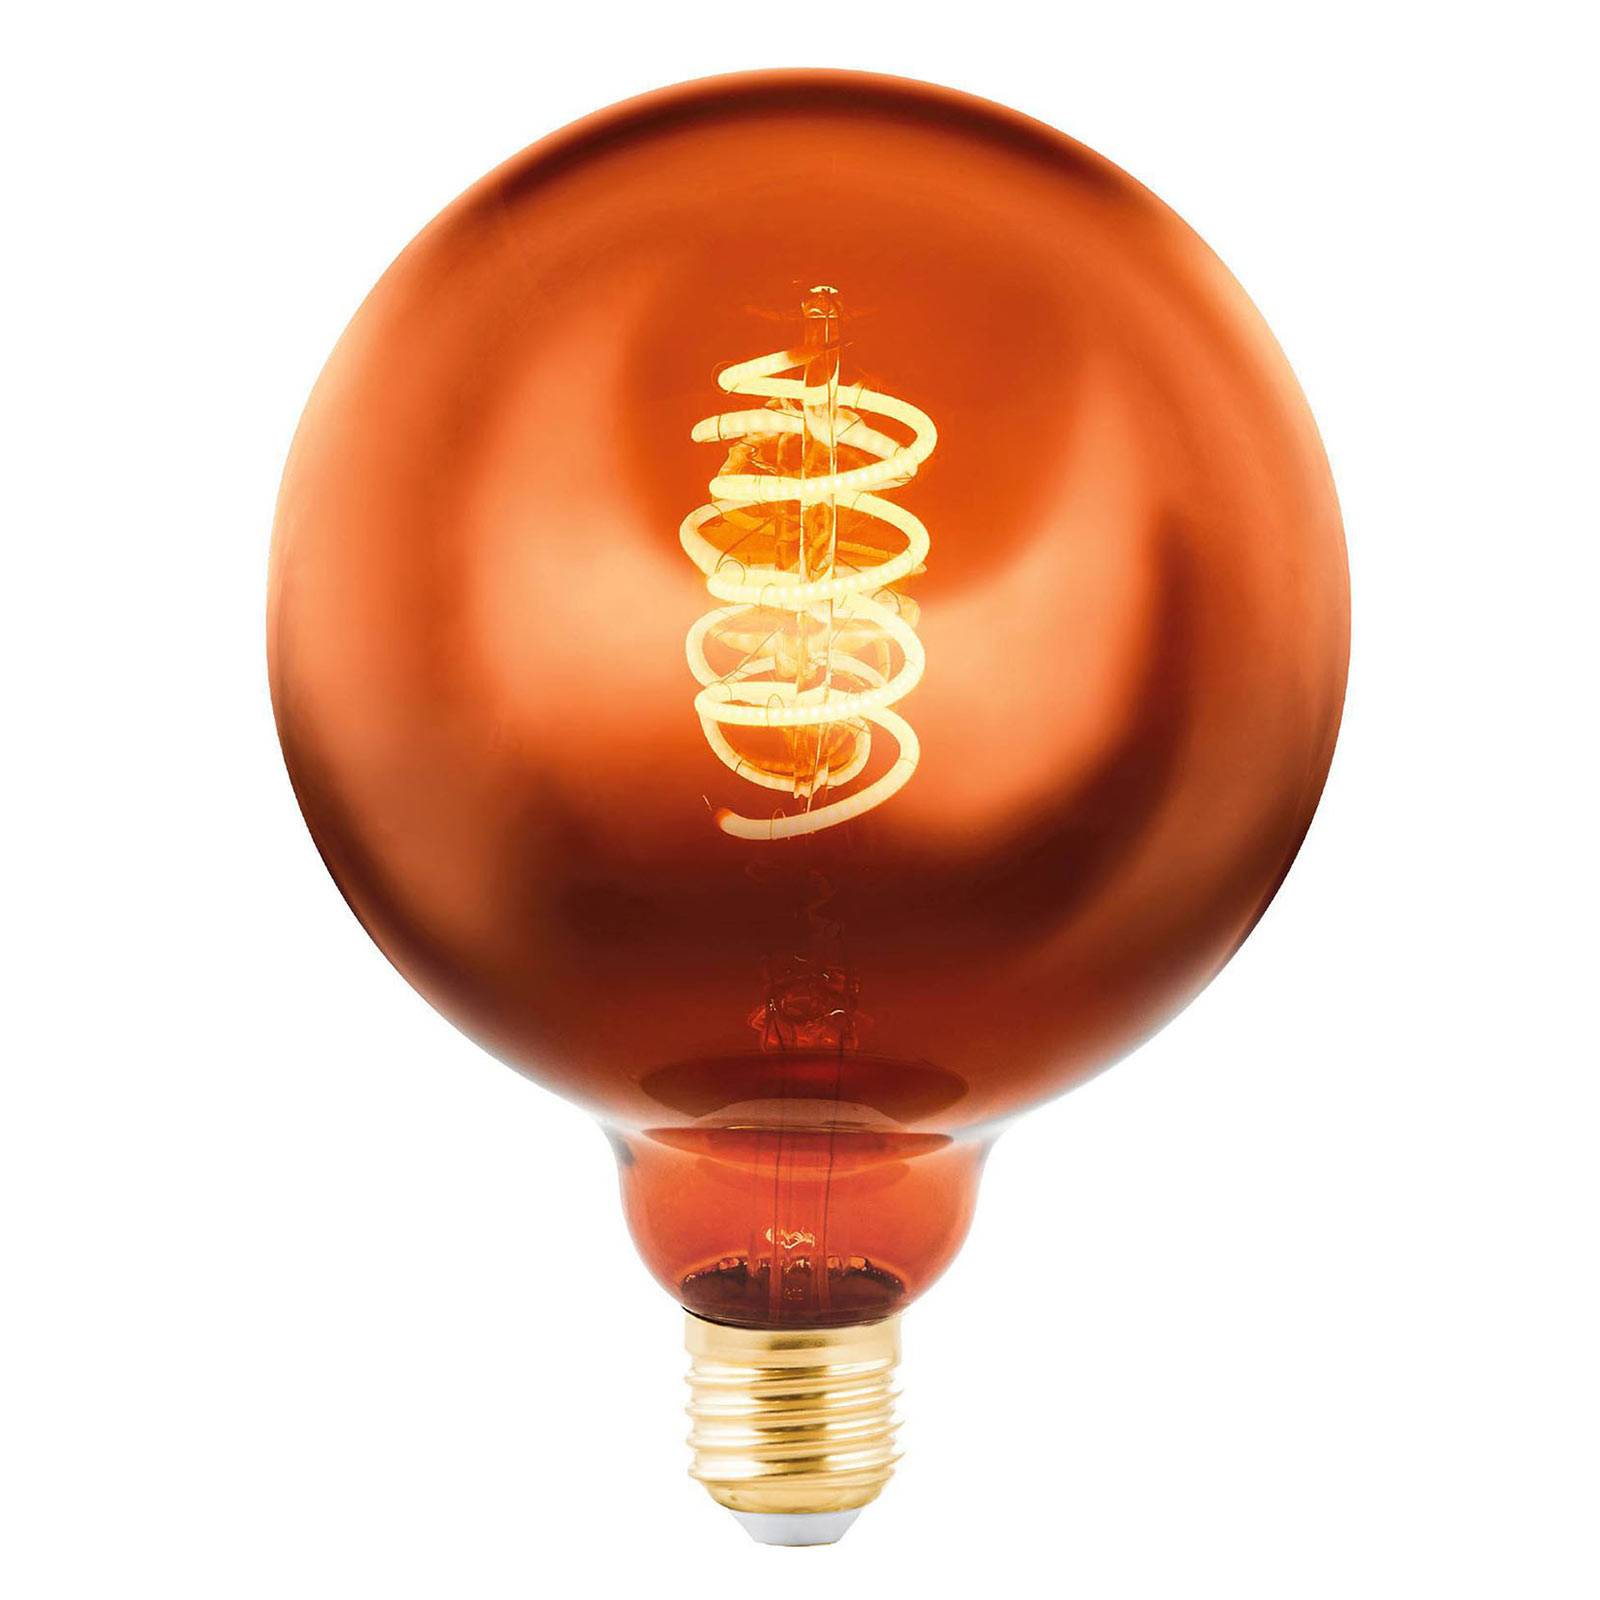 EGLO LED-Globelampe E27 4W kupfer bedampft Ø 12,5 cm